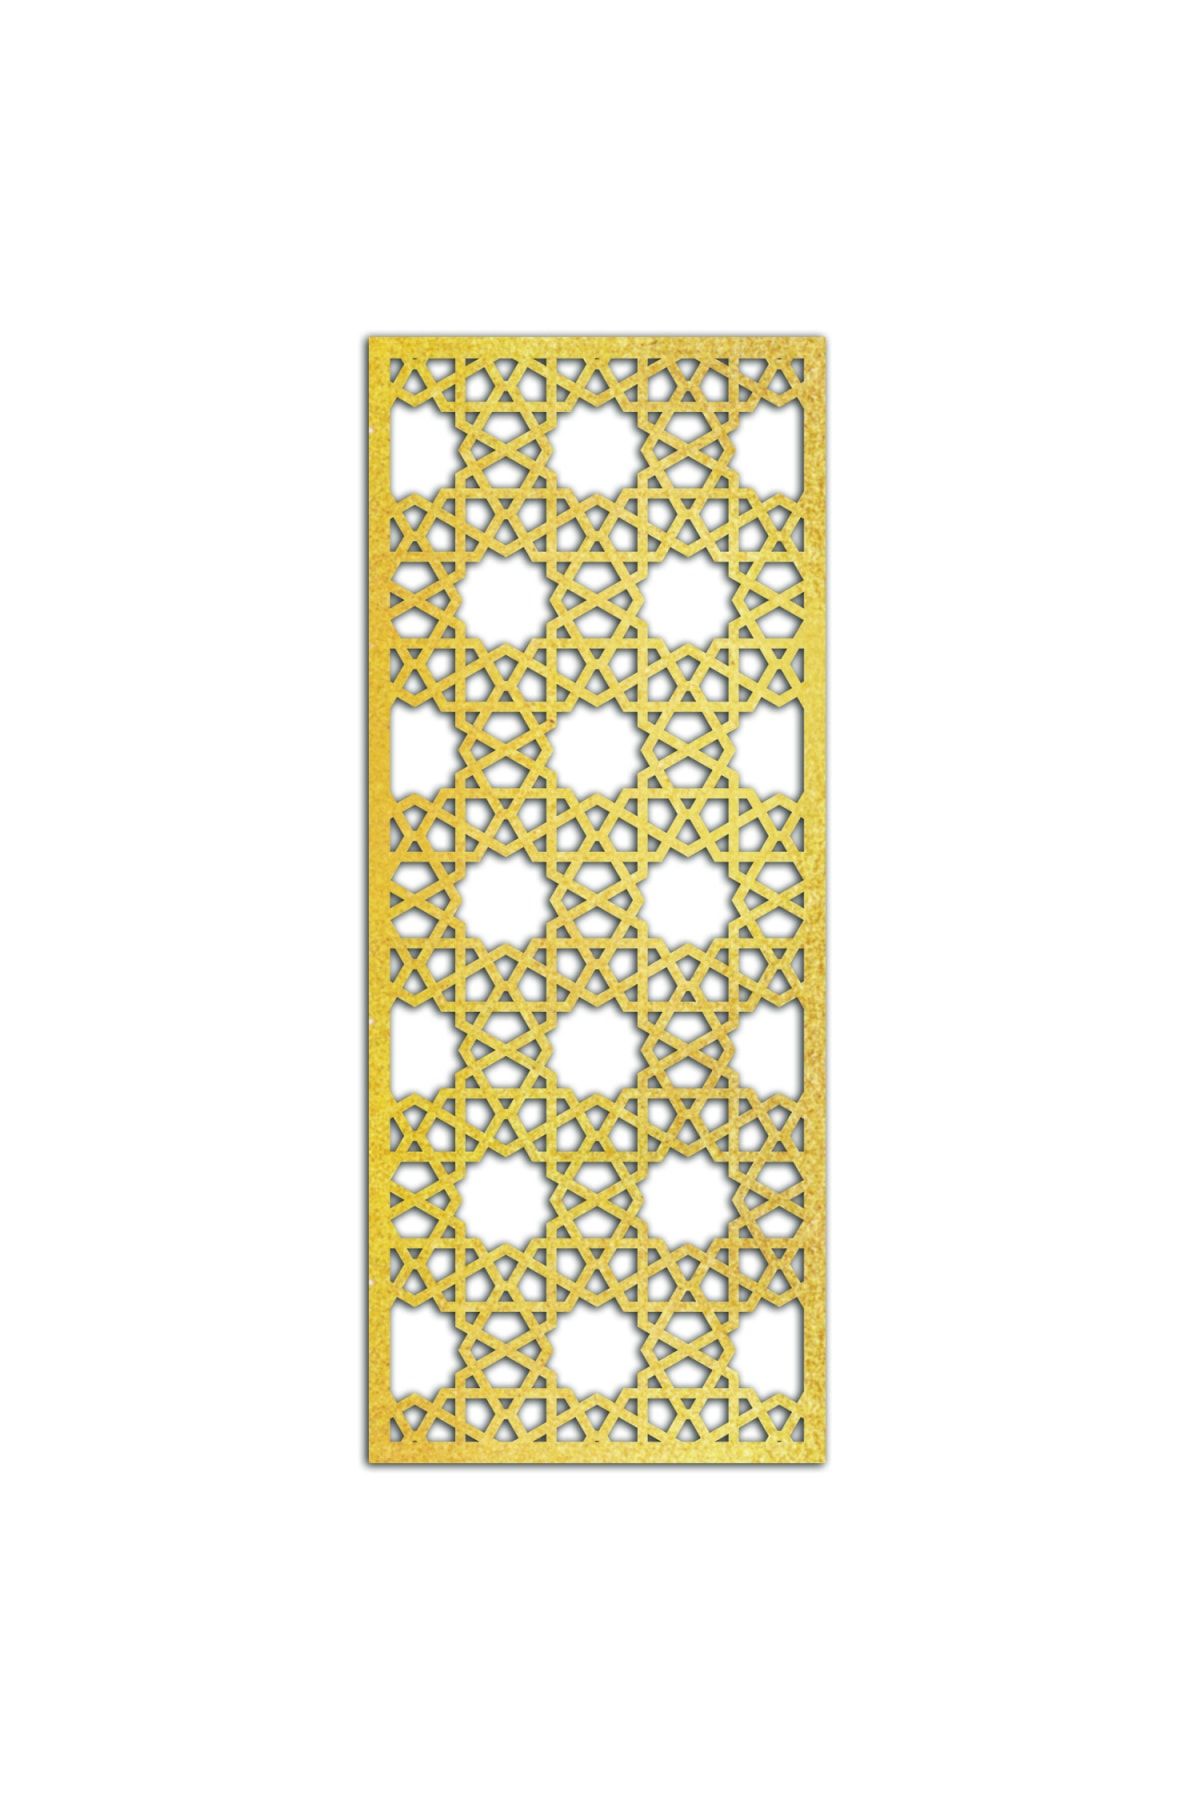 Liar Dekor Liar Ahşap Seperatör (Paravan) - KSP-211 - (10 mm) - (69 cm x 139 cm) - (Gold)